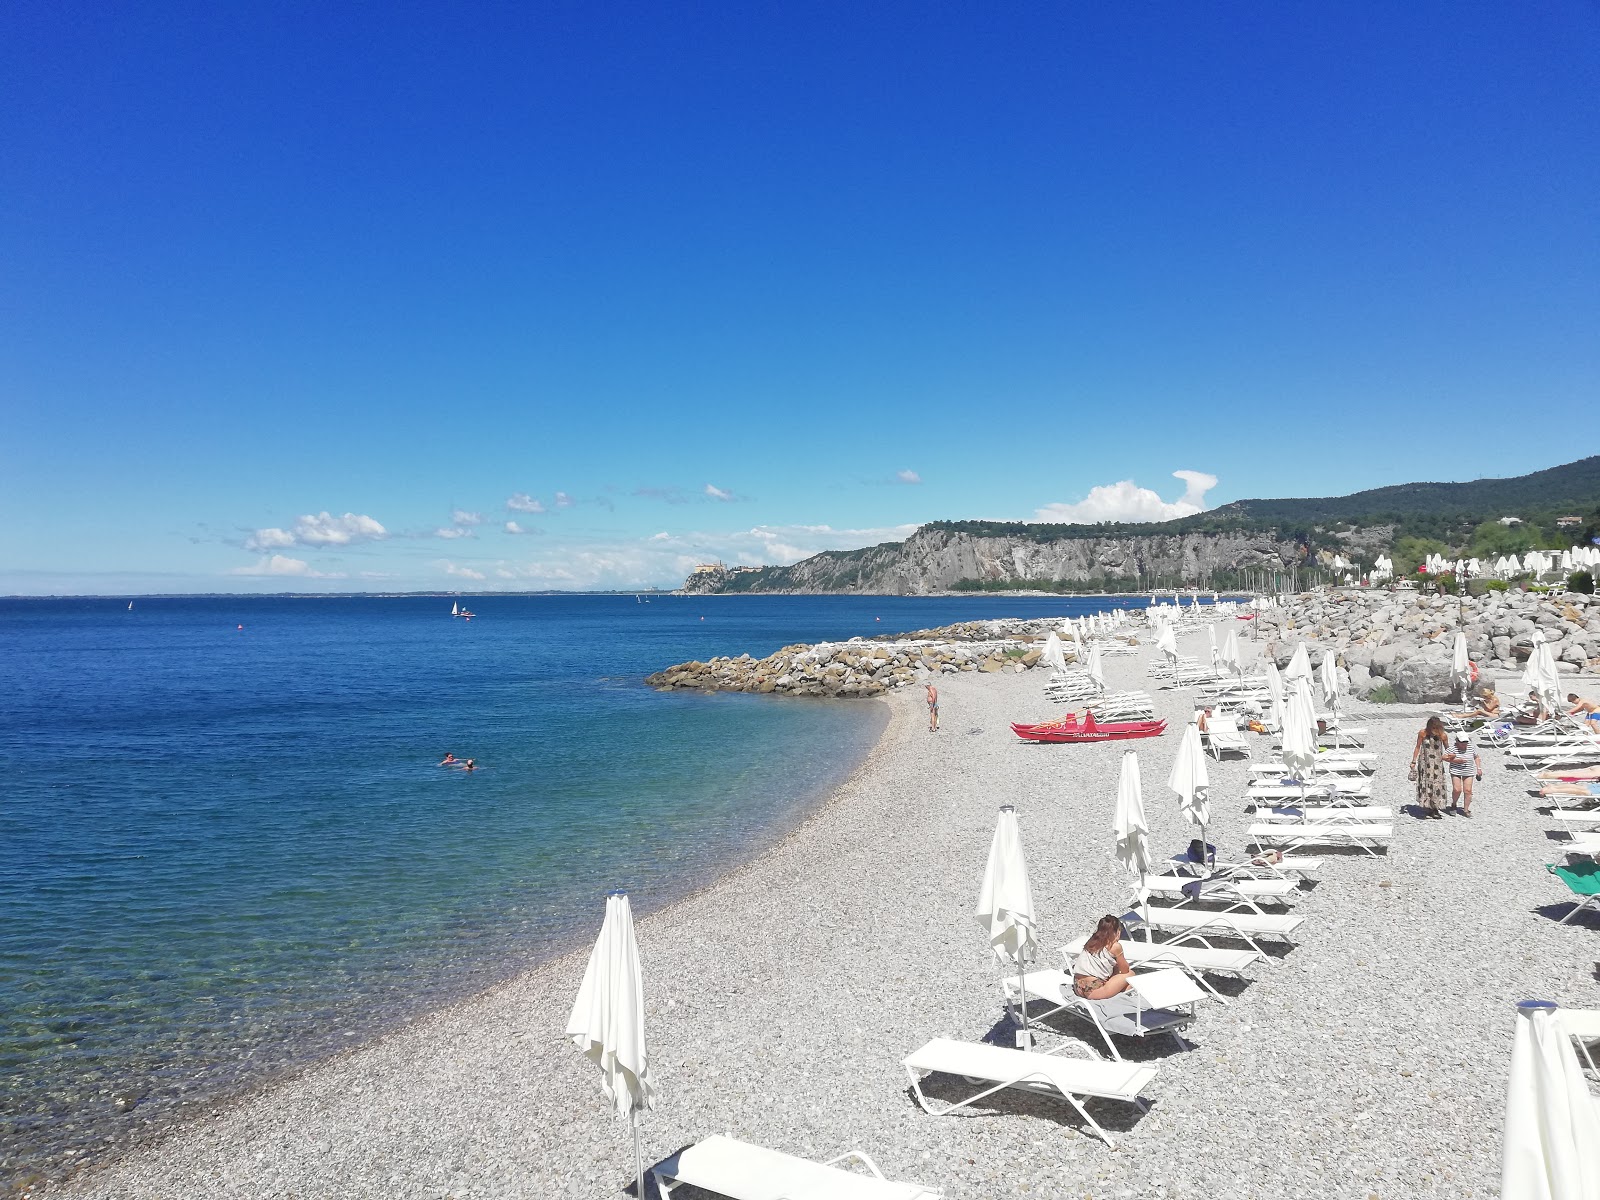 Spiaggia di Portopiccolo Sistiana'in fotoğrafı gri ince çakıl taş yüzey ile